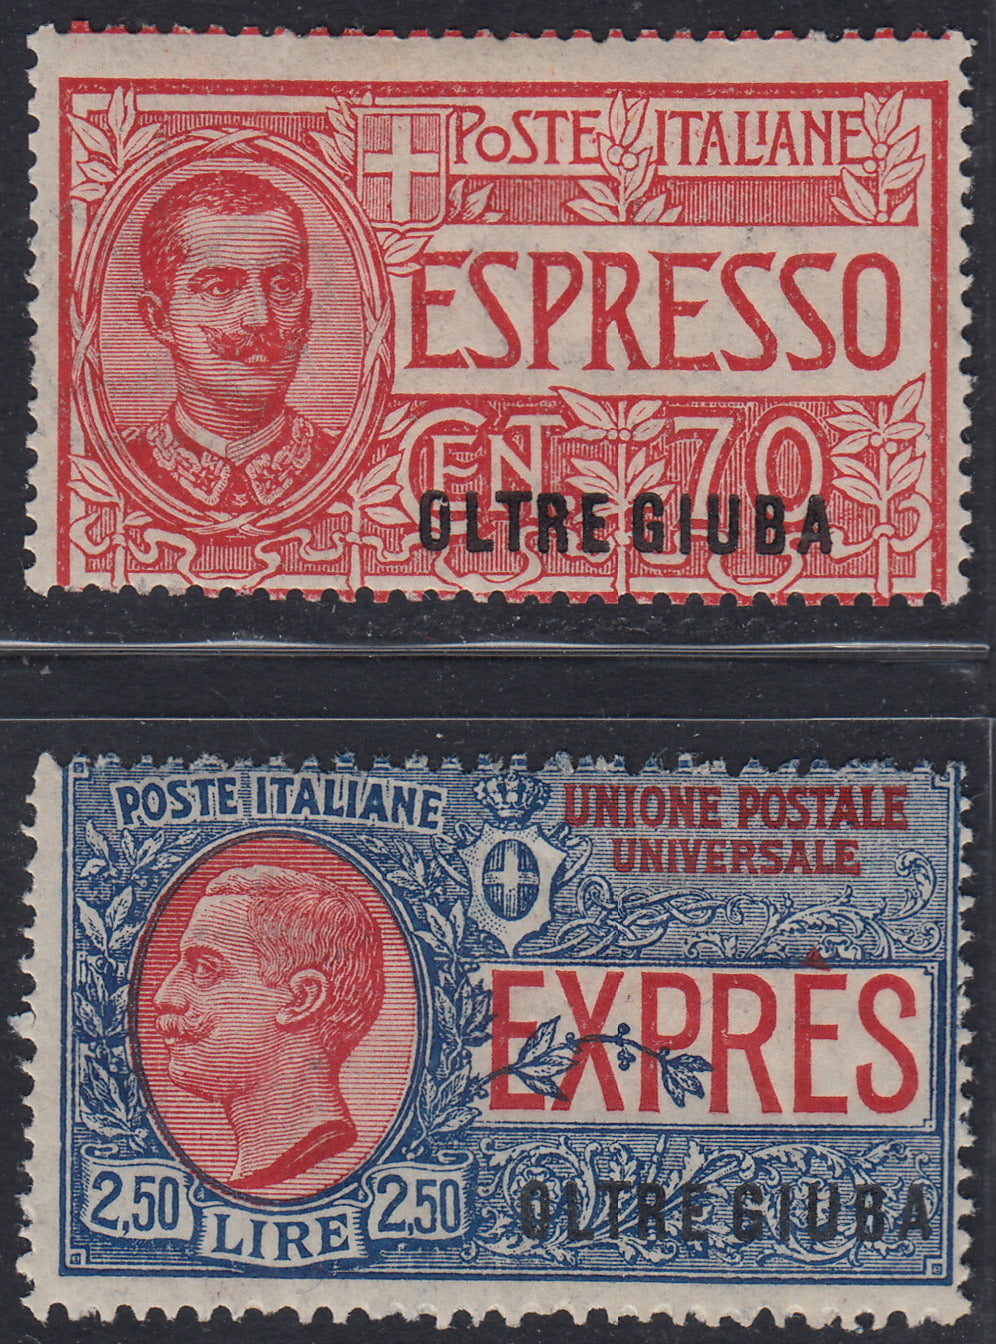 OG34 - 1926 - Espresso di Regno overprinted "OLTRE GIUBA" series of two values, new original rubber (E1, 2)